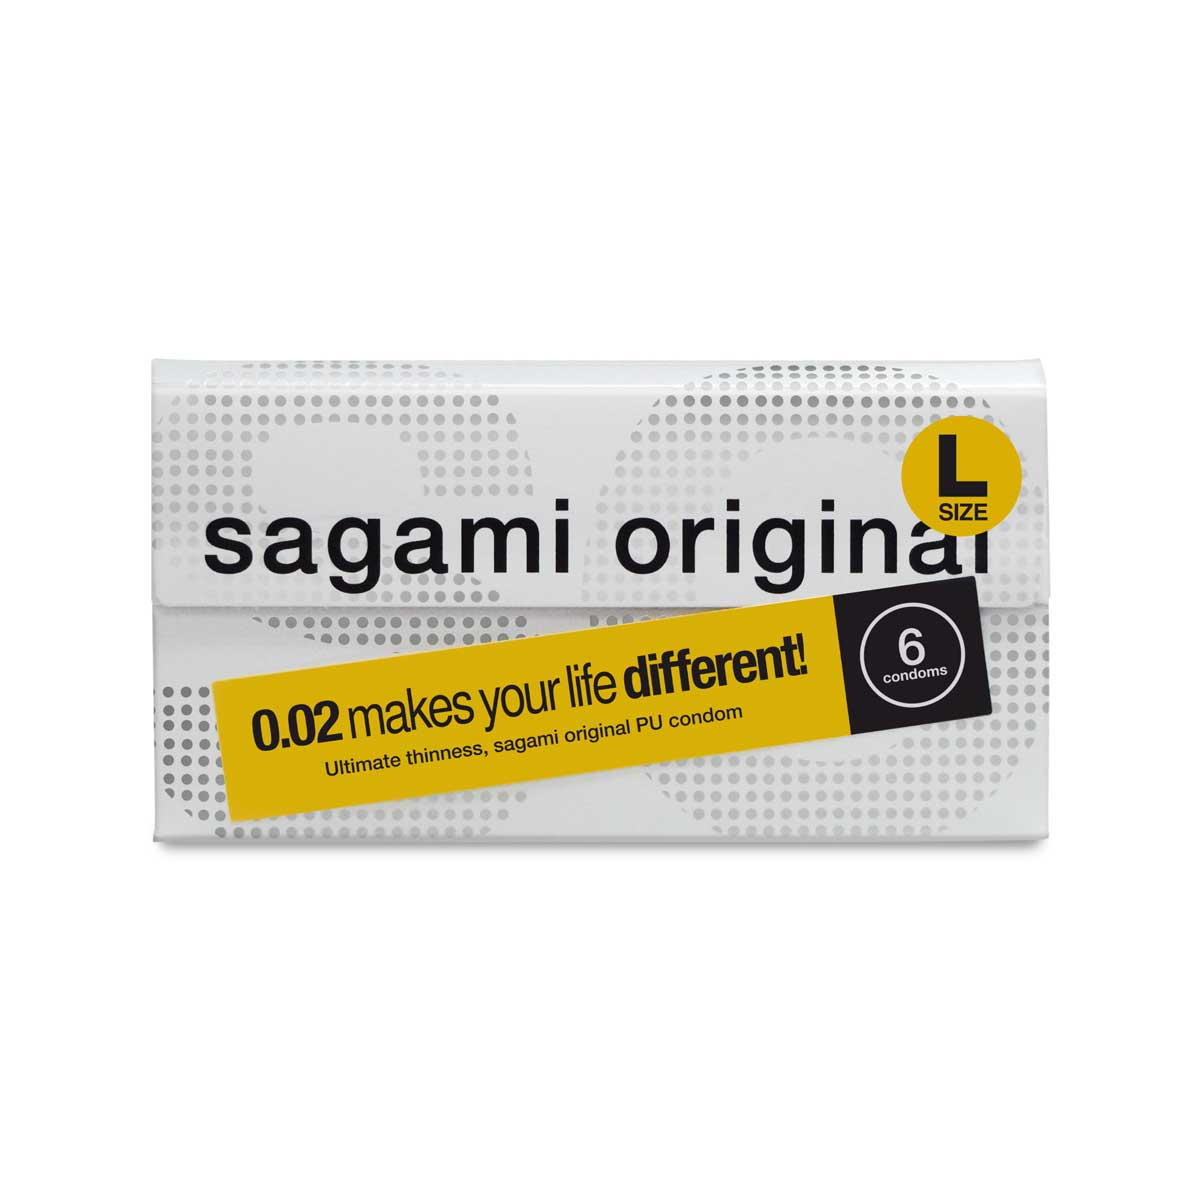 Sagami Original 0.02 Large Size 6s